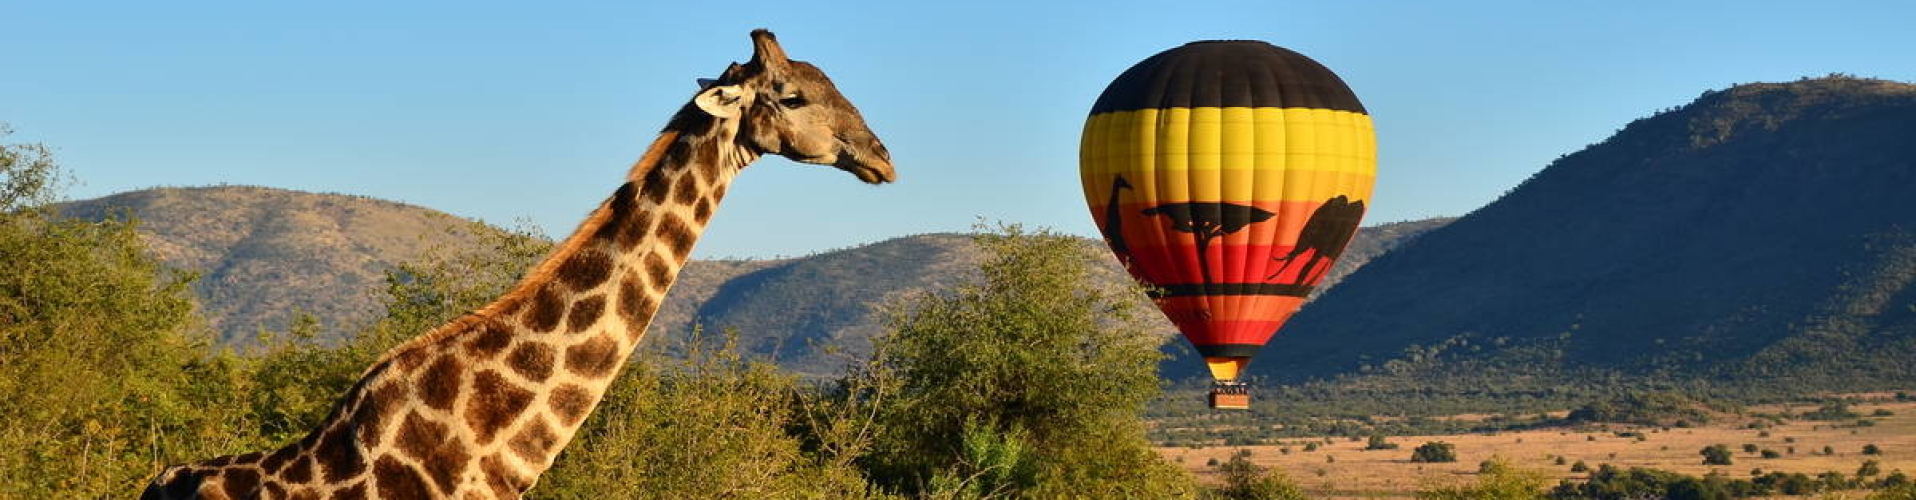 luchtballon varen in zuid-afrika pillansaberg safari